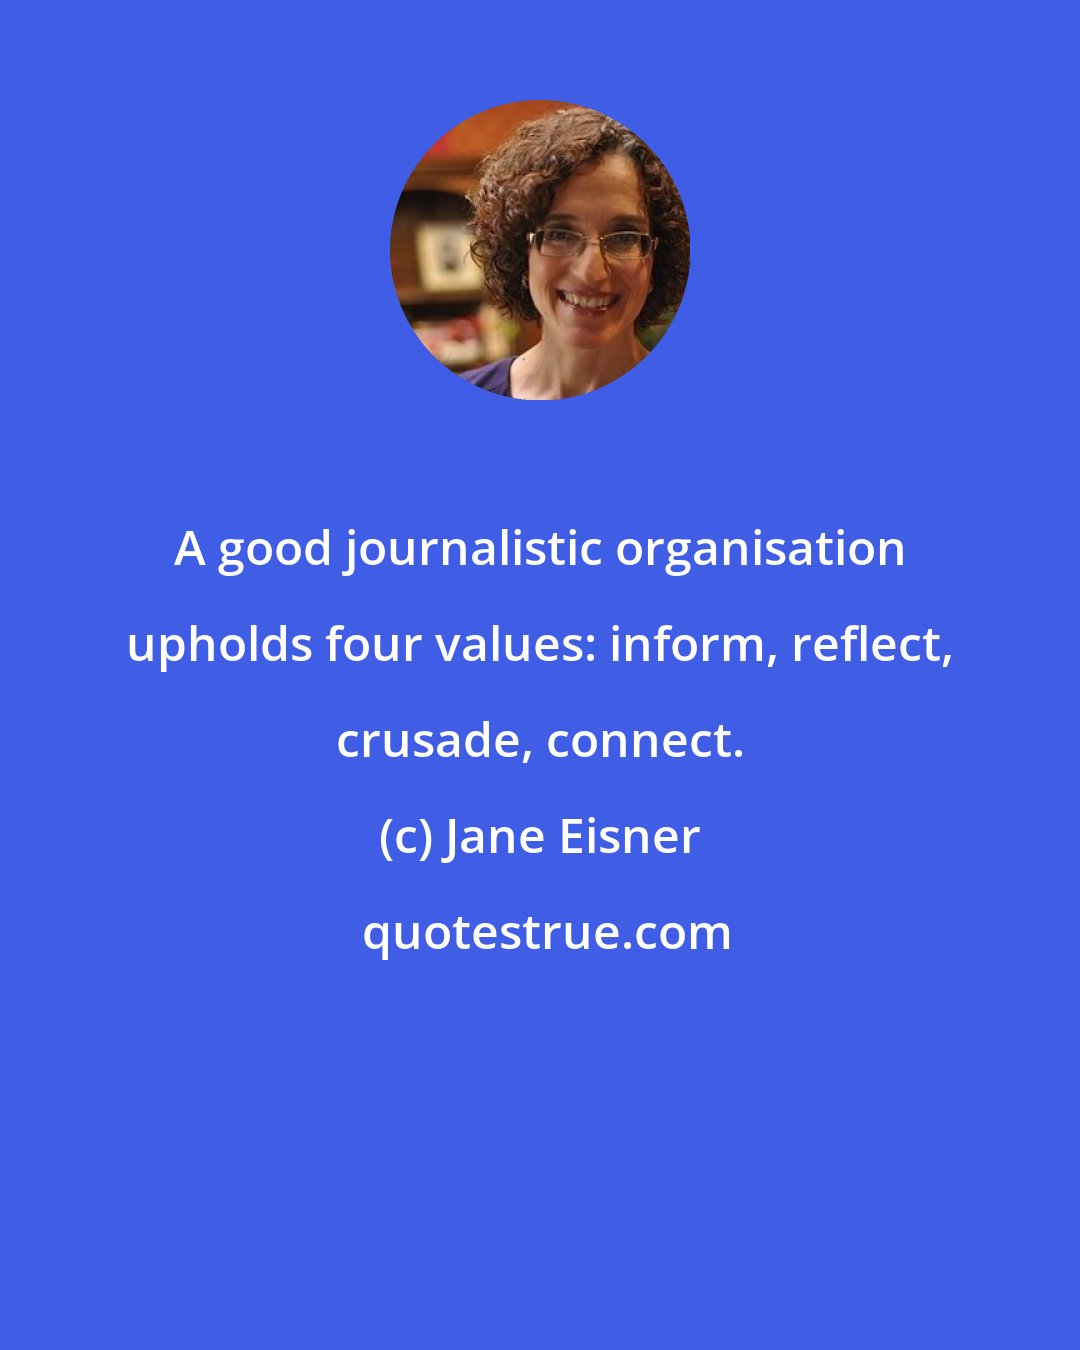 Jane Eisner: A good journalistic organisation upholds four values: inform, reflect, crusade, connect.